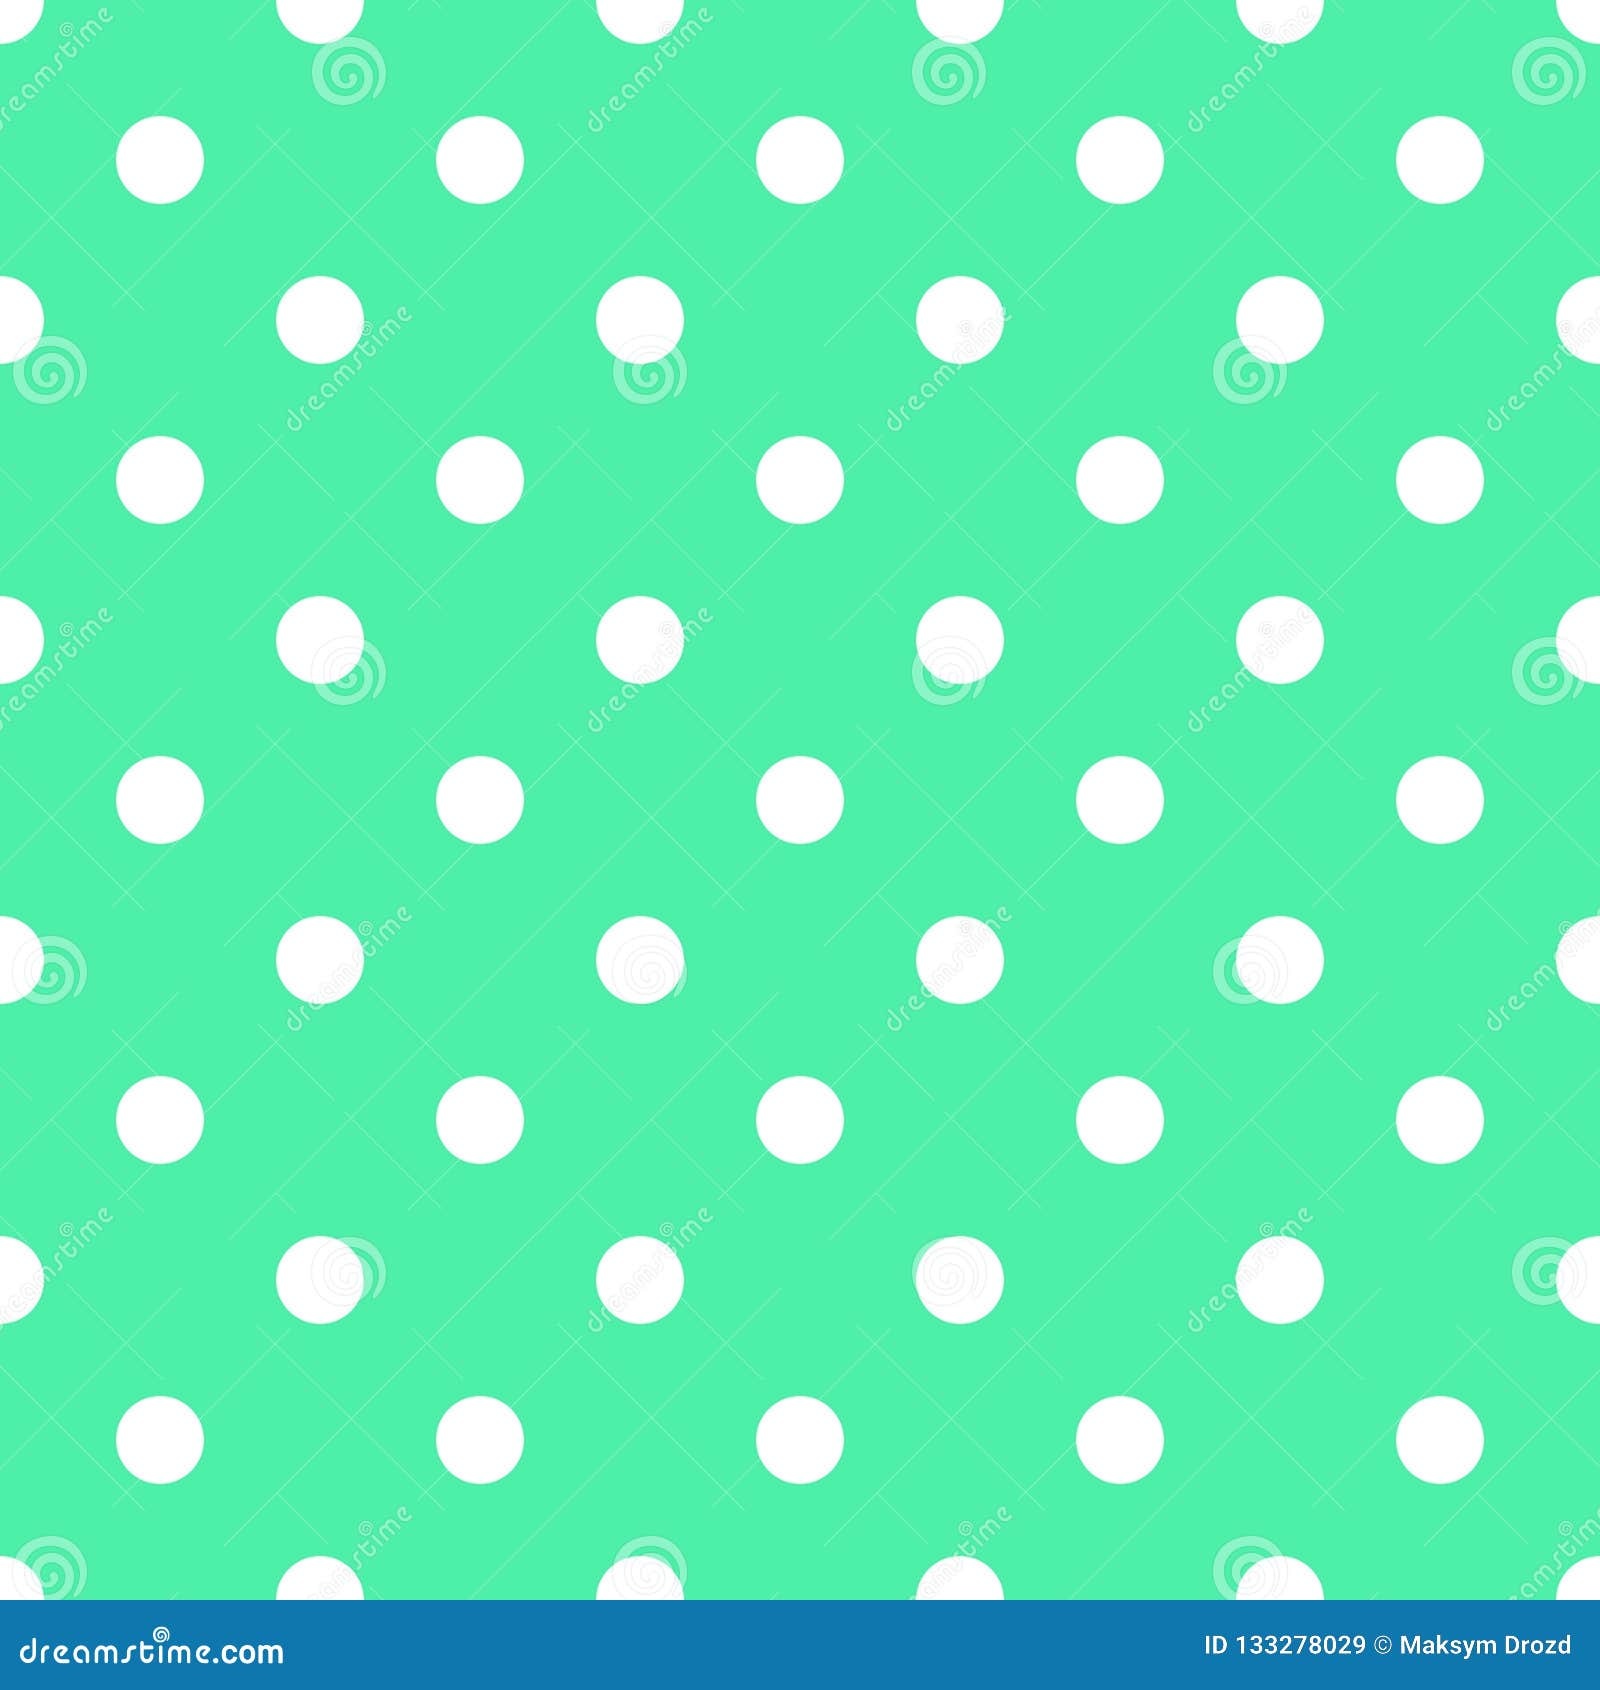 Seamless Polka Dot Pattern Background Stock Vector - Illustration of ...